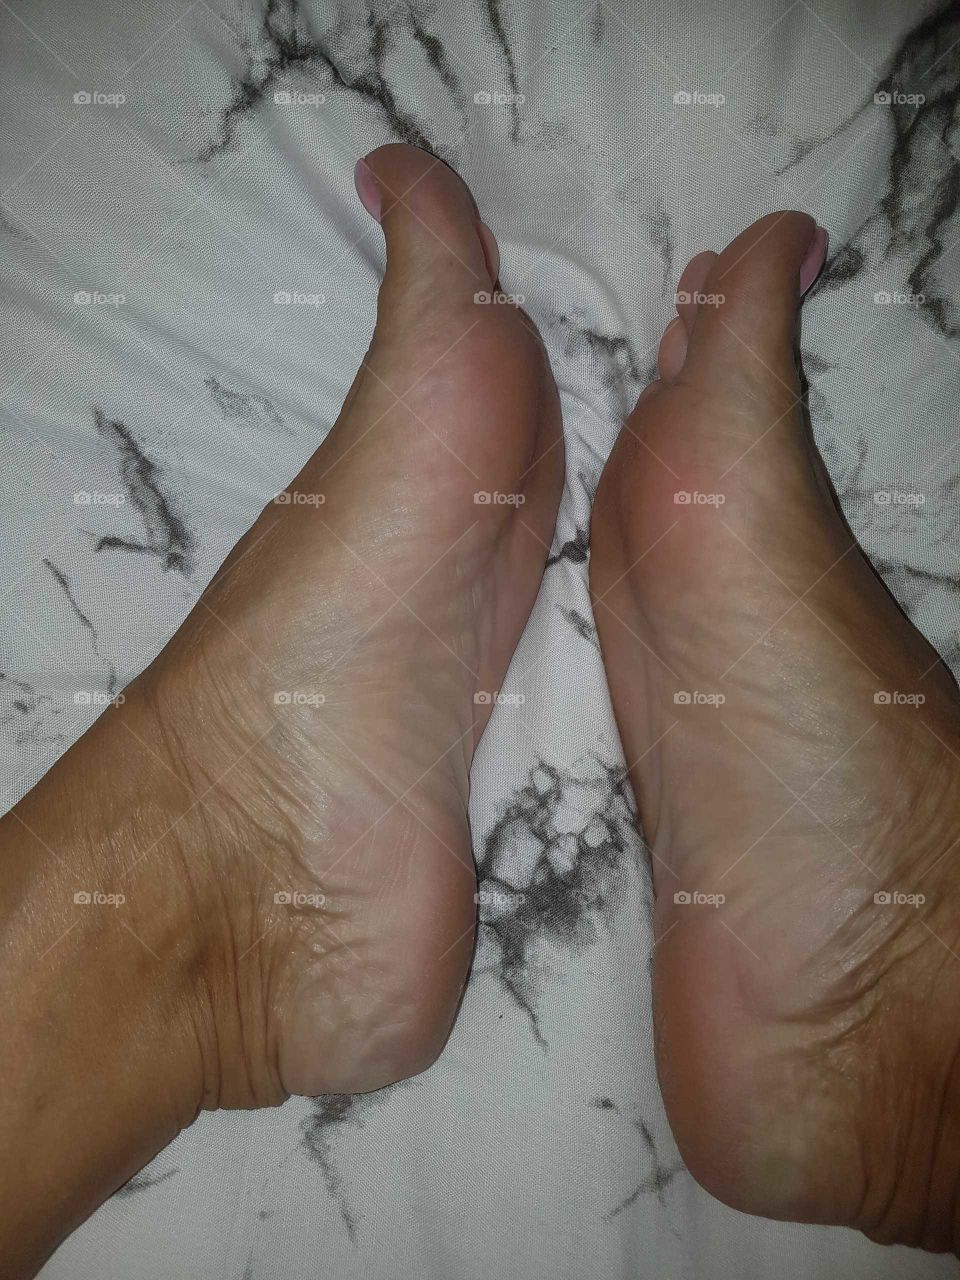 Baring my soles #feetfetishworld #feet